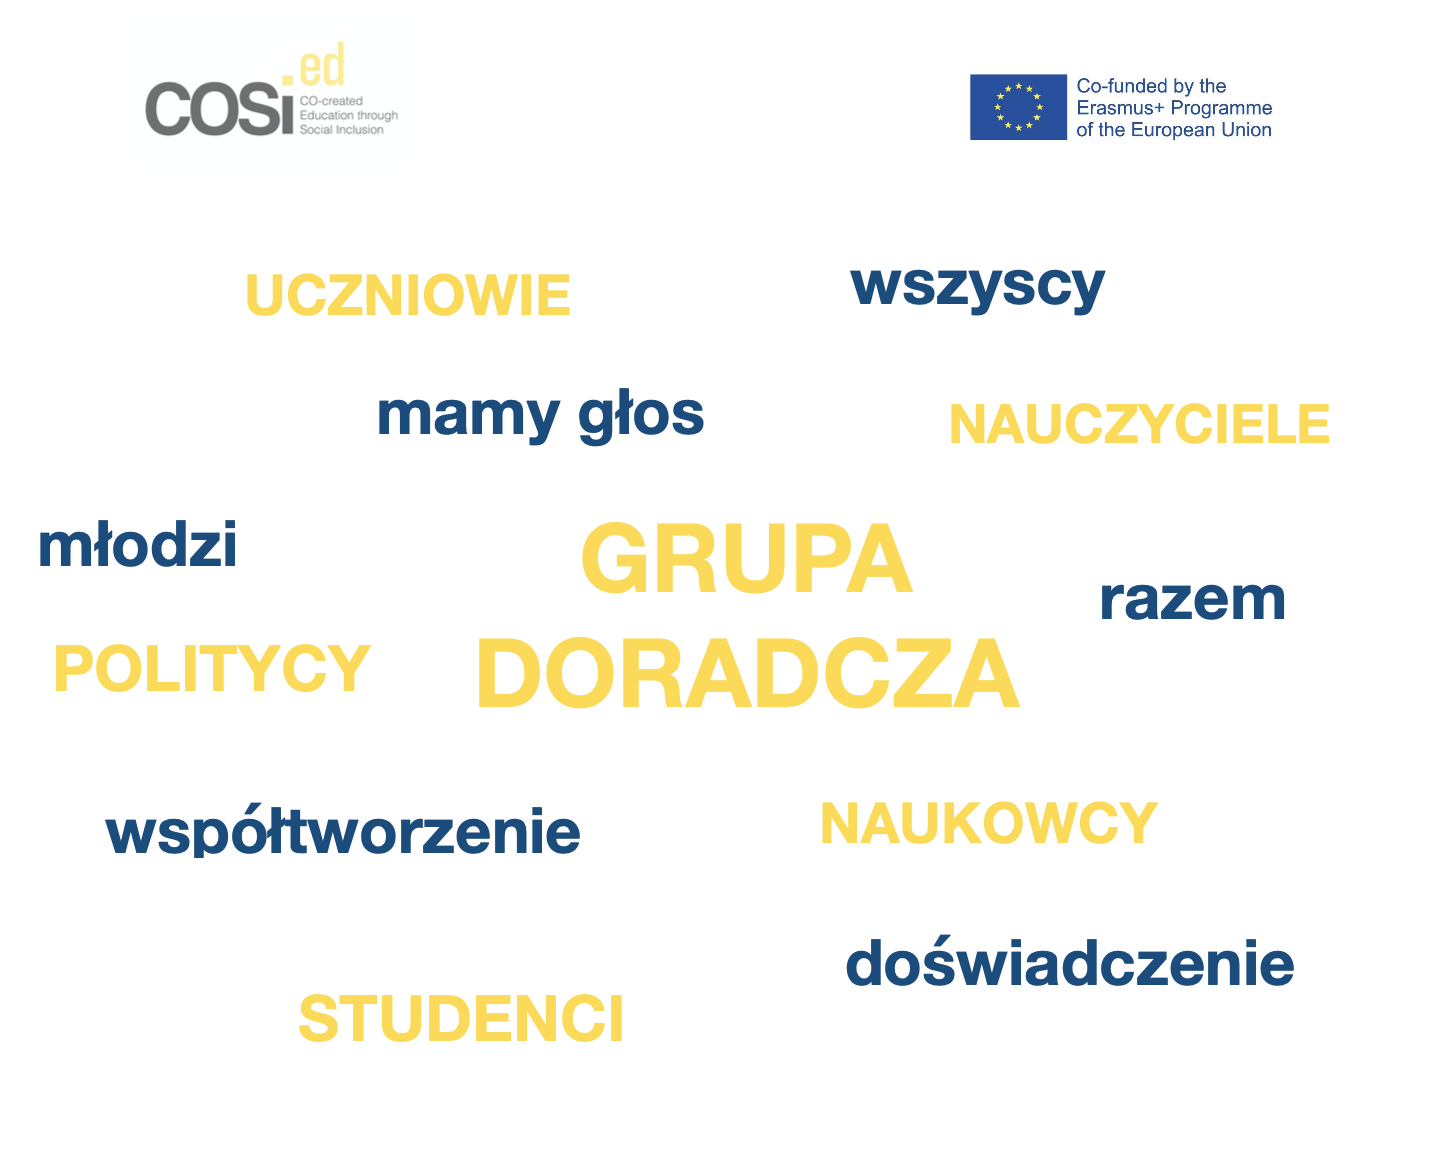 CCG presentation in Poland